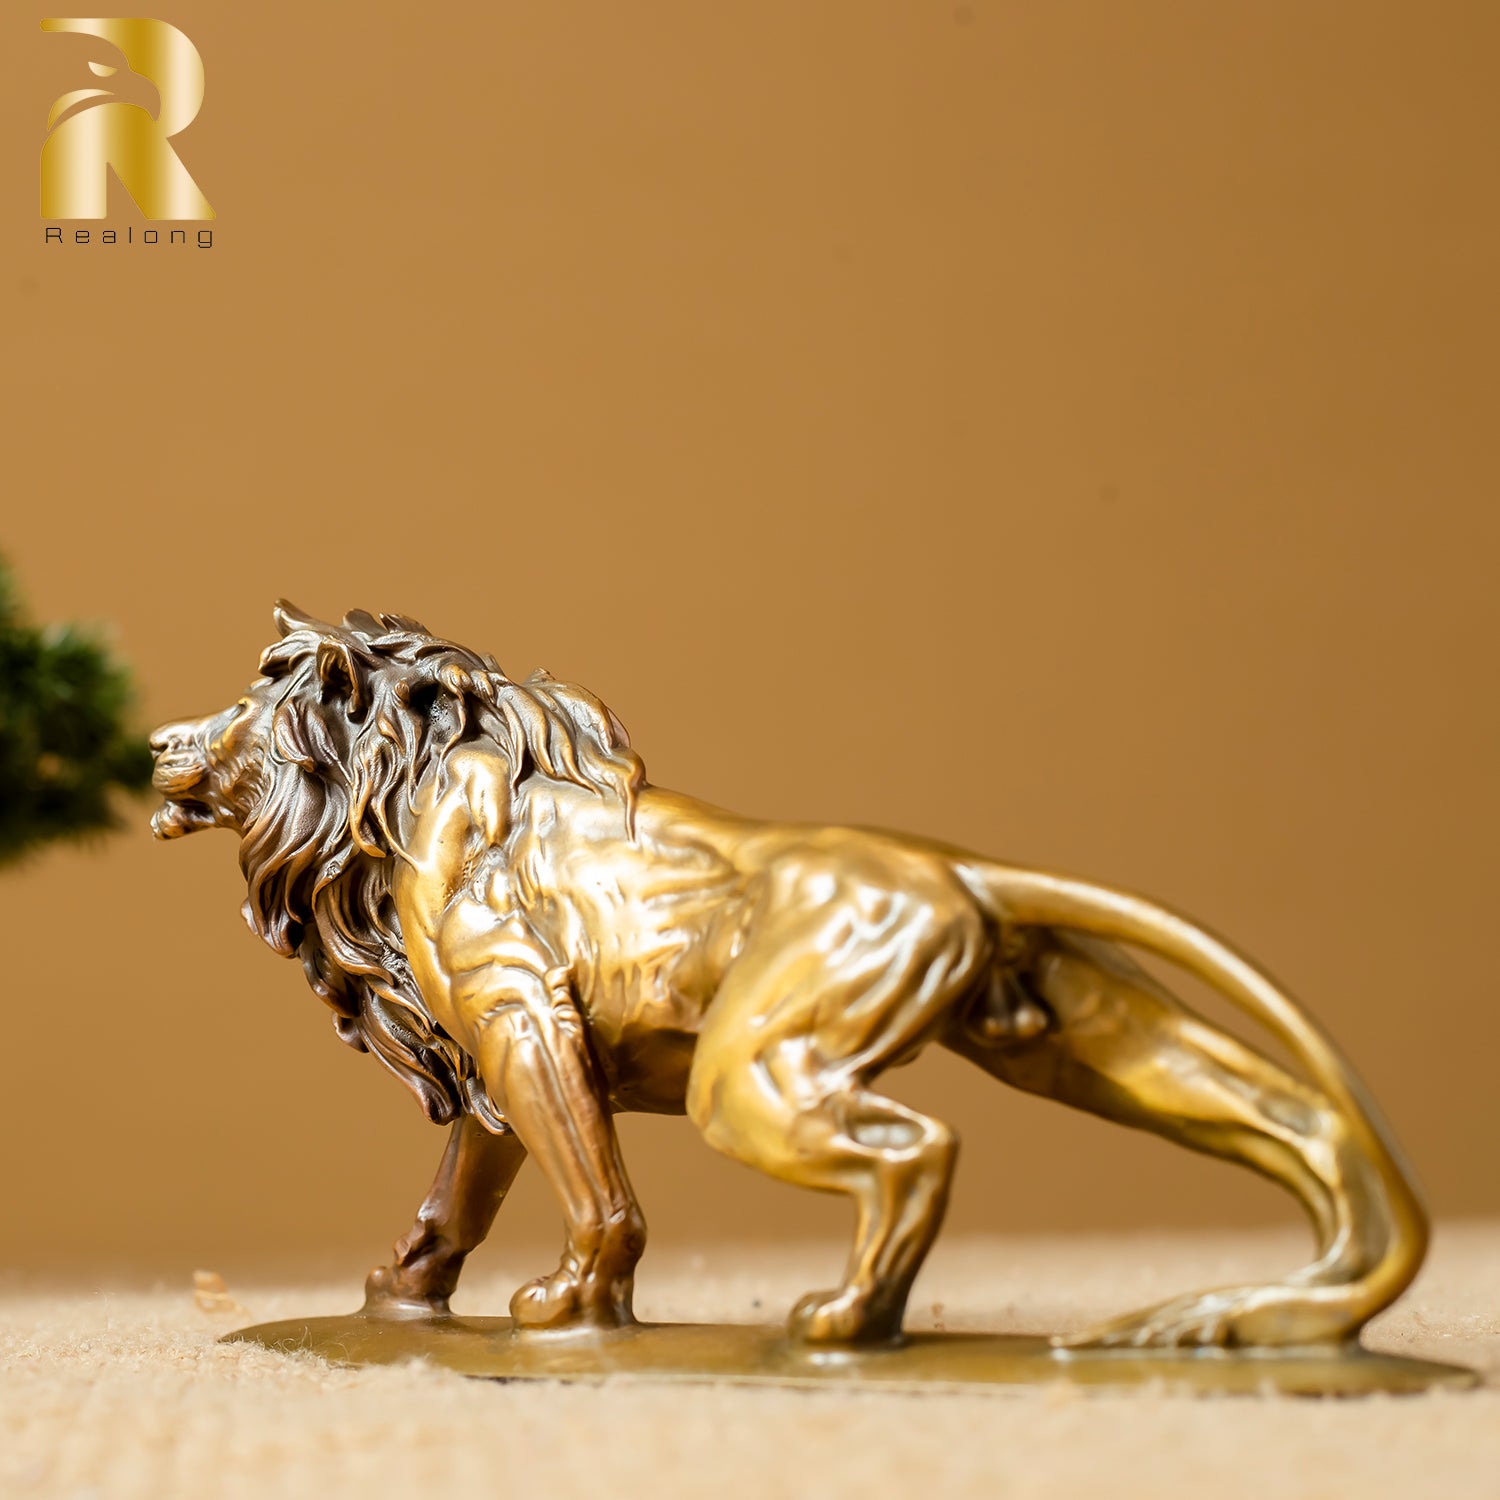 Bronze Lion Statue Casting Bronze Lion Sculpture Exquisite Art Crafts For Home Office Decoration Luxury Ornament Tasteful Gifts